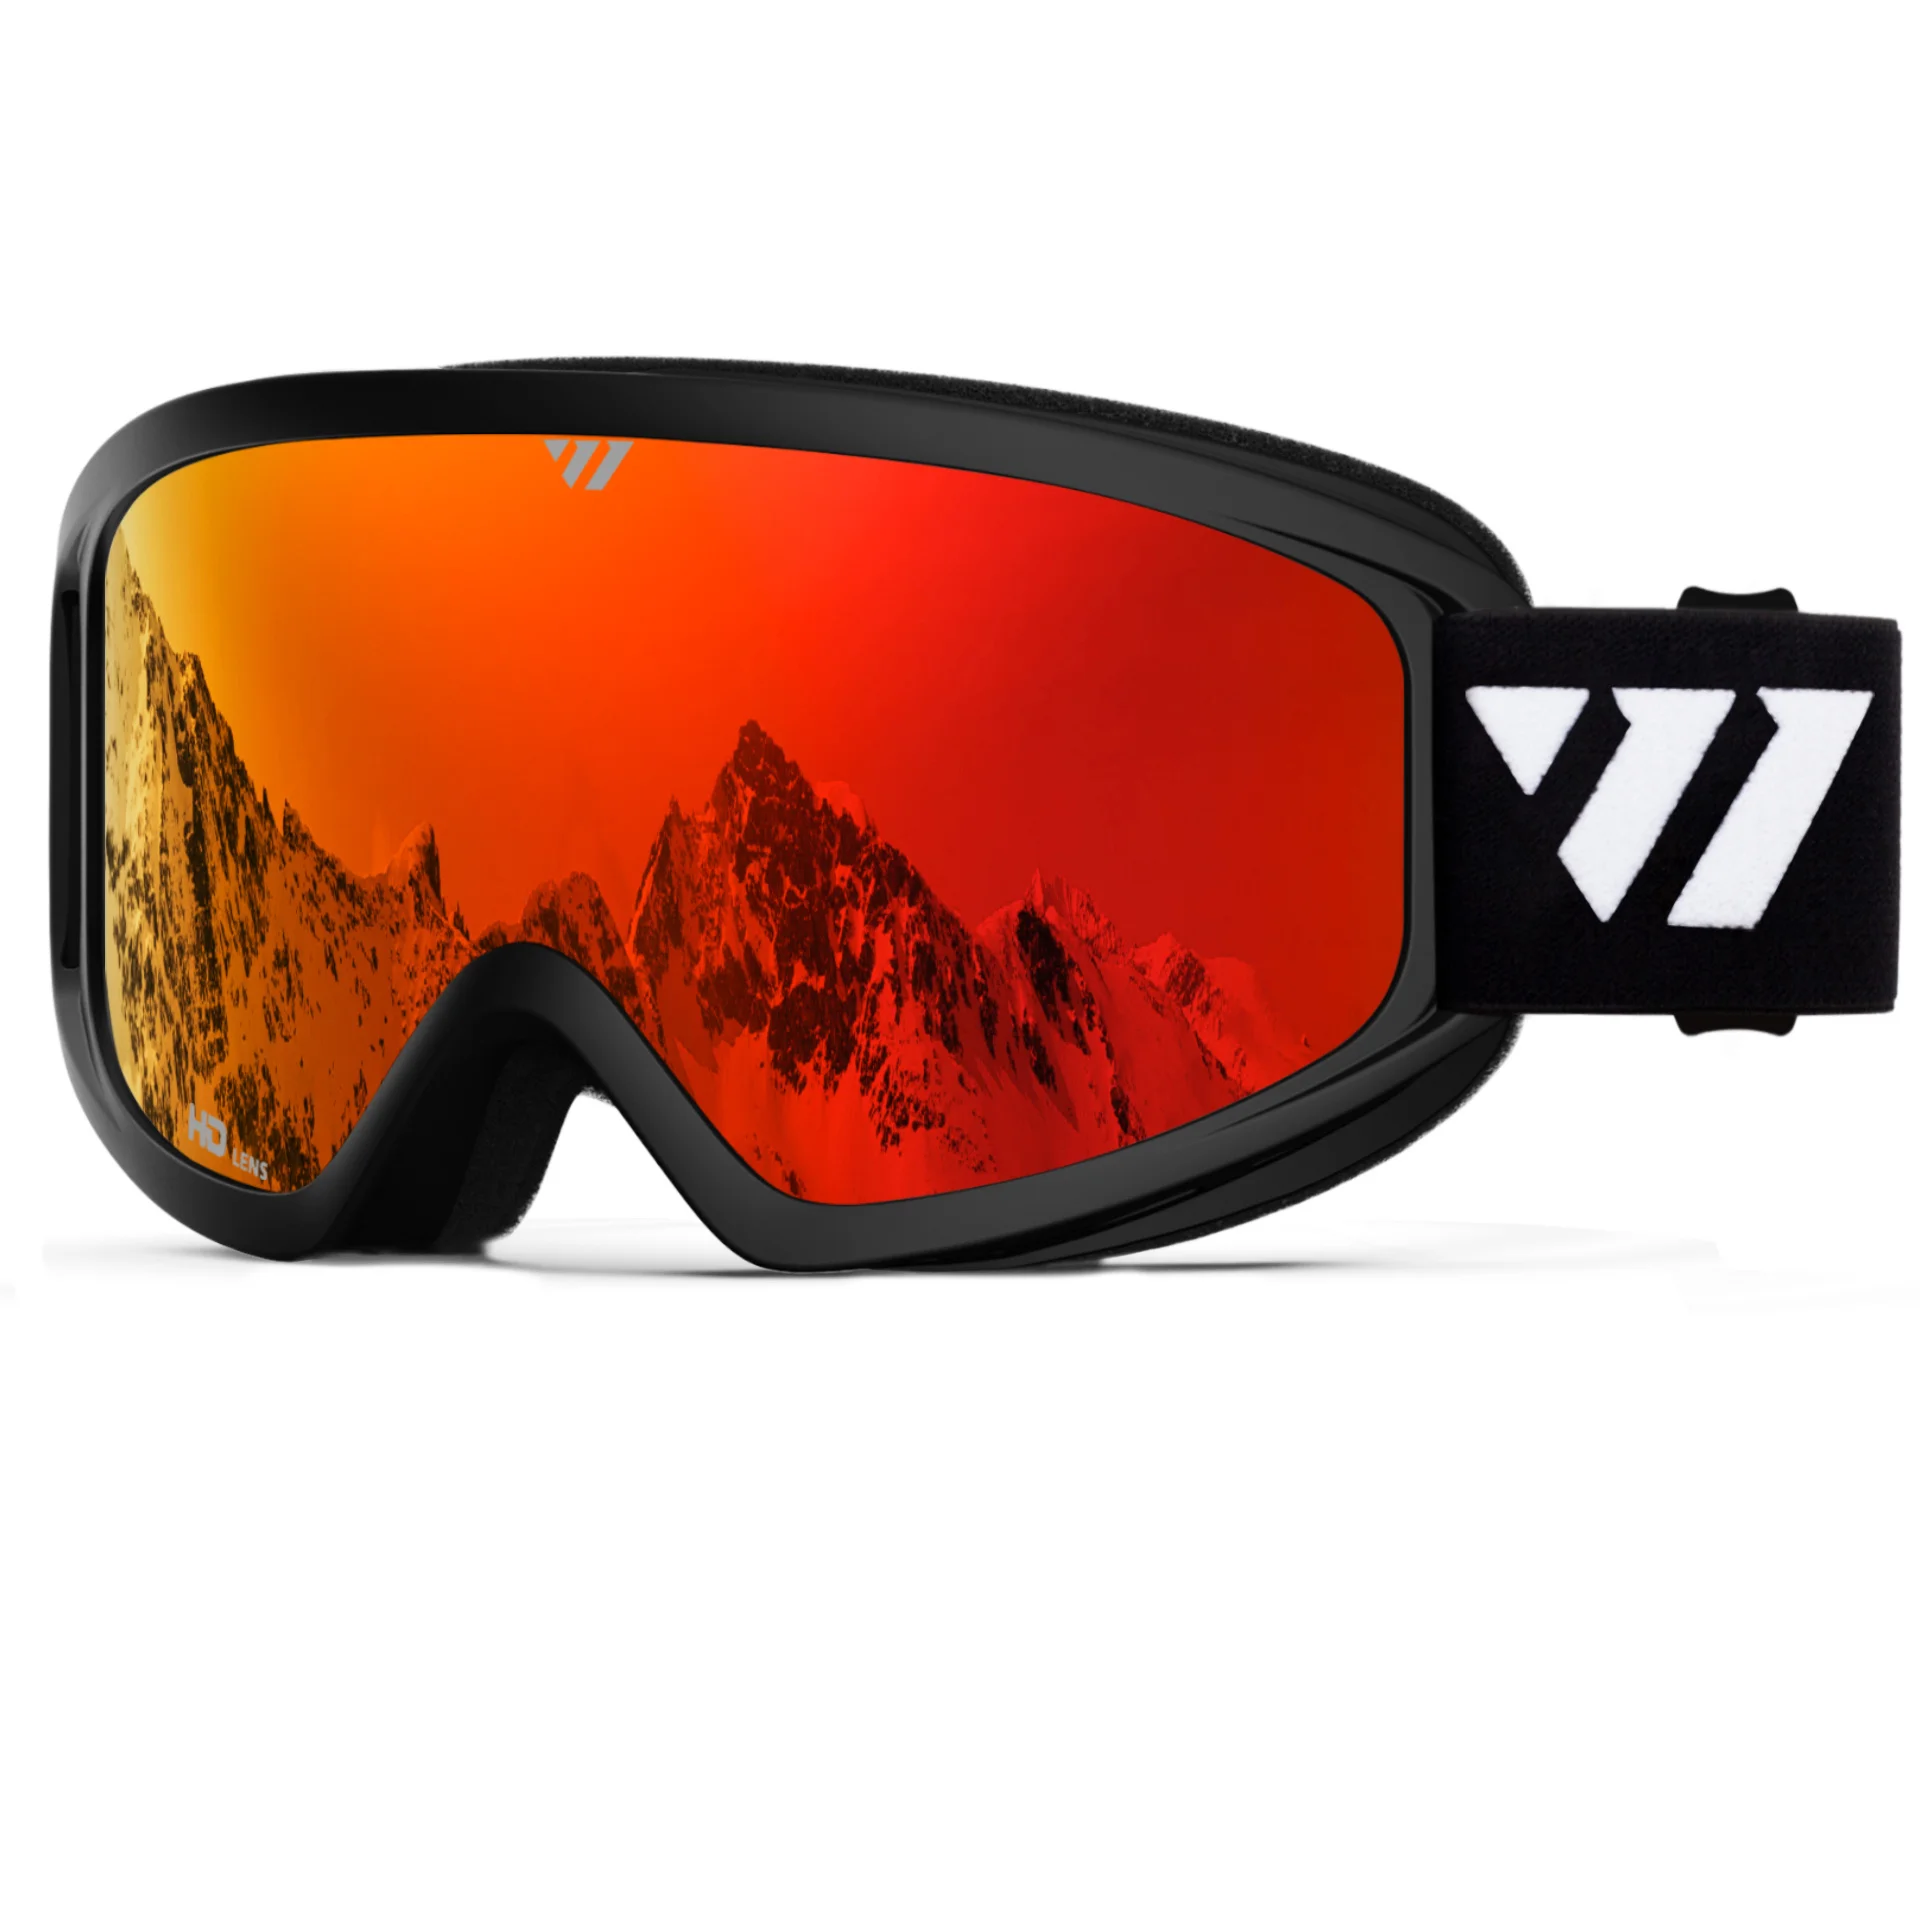 JULI Brand Professional Ski Goggles Double Layers Lens Anti-fog UV400 Ski Glasses Skiing Snowboard Gogglesw Goggles Men Women W1